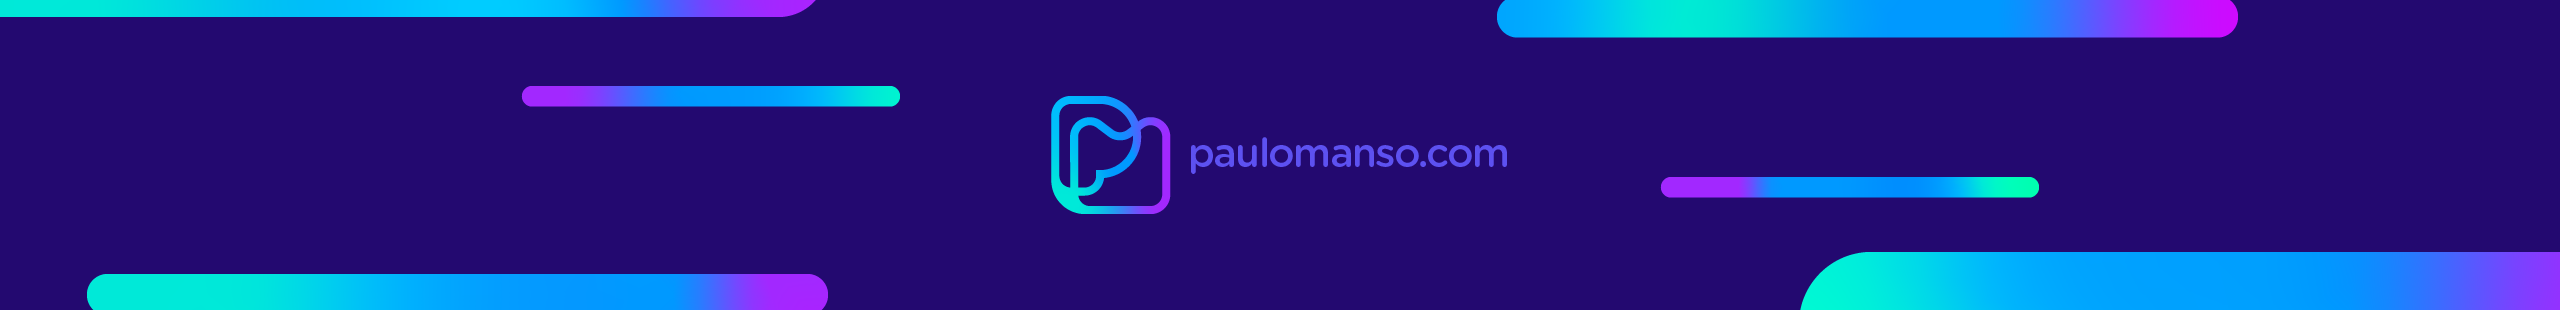 Paulo Manso's profile banner